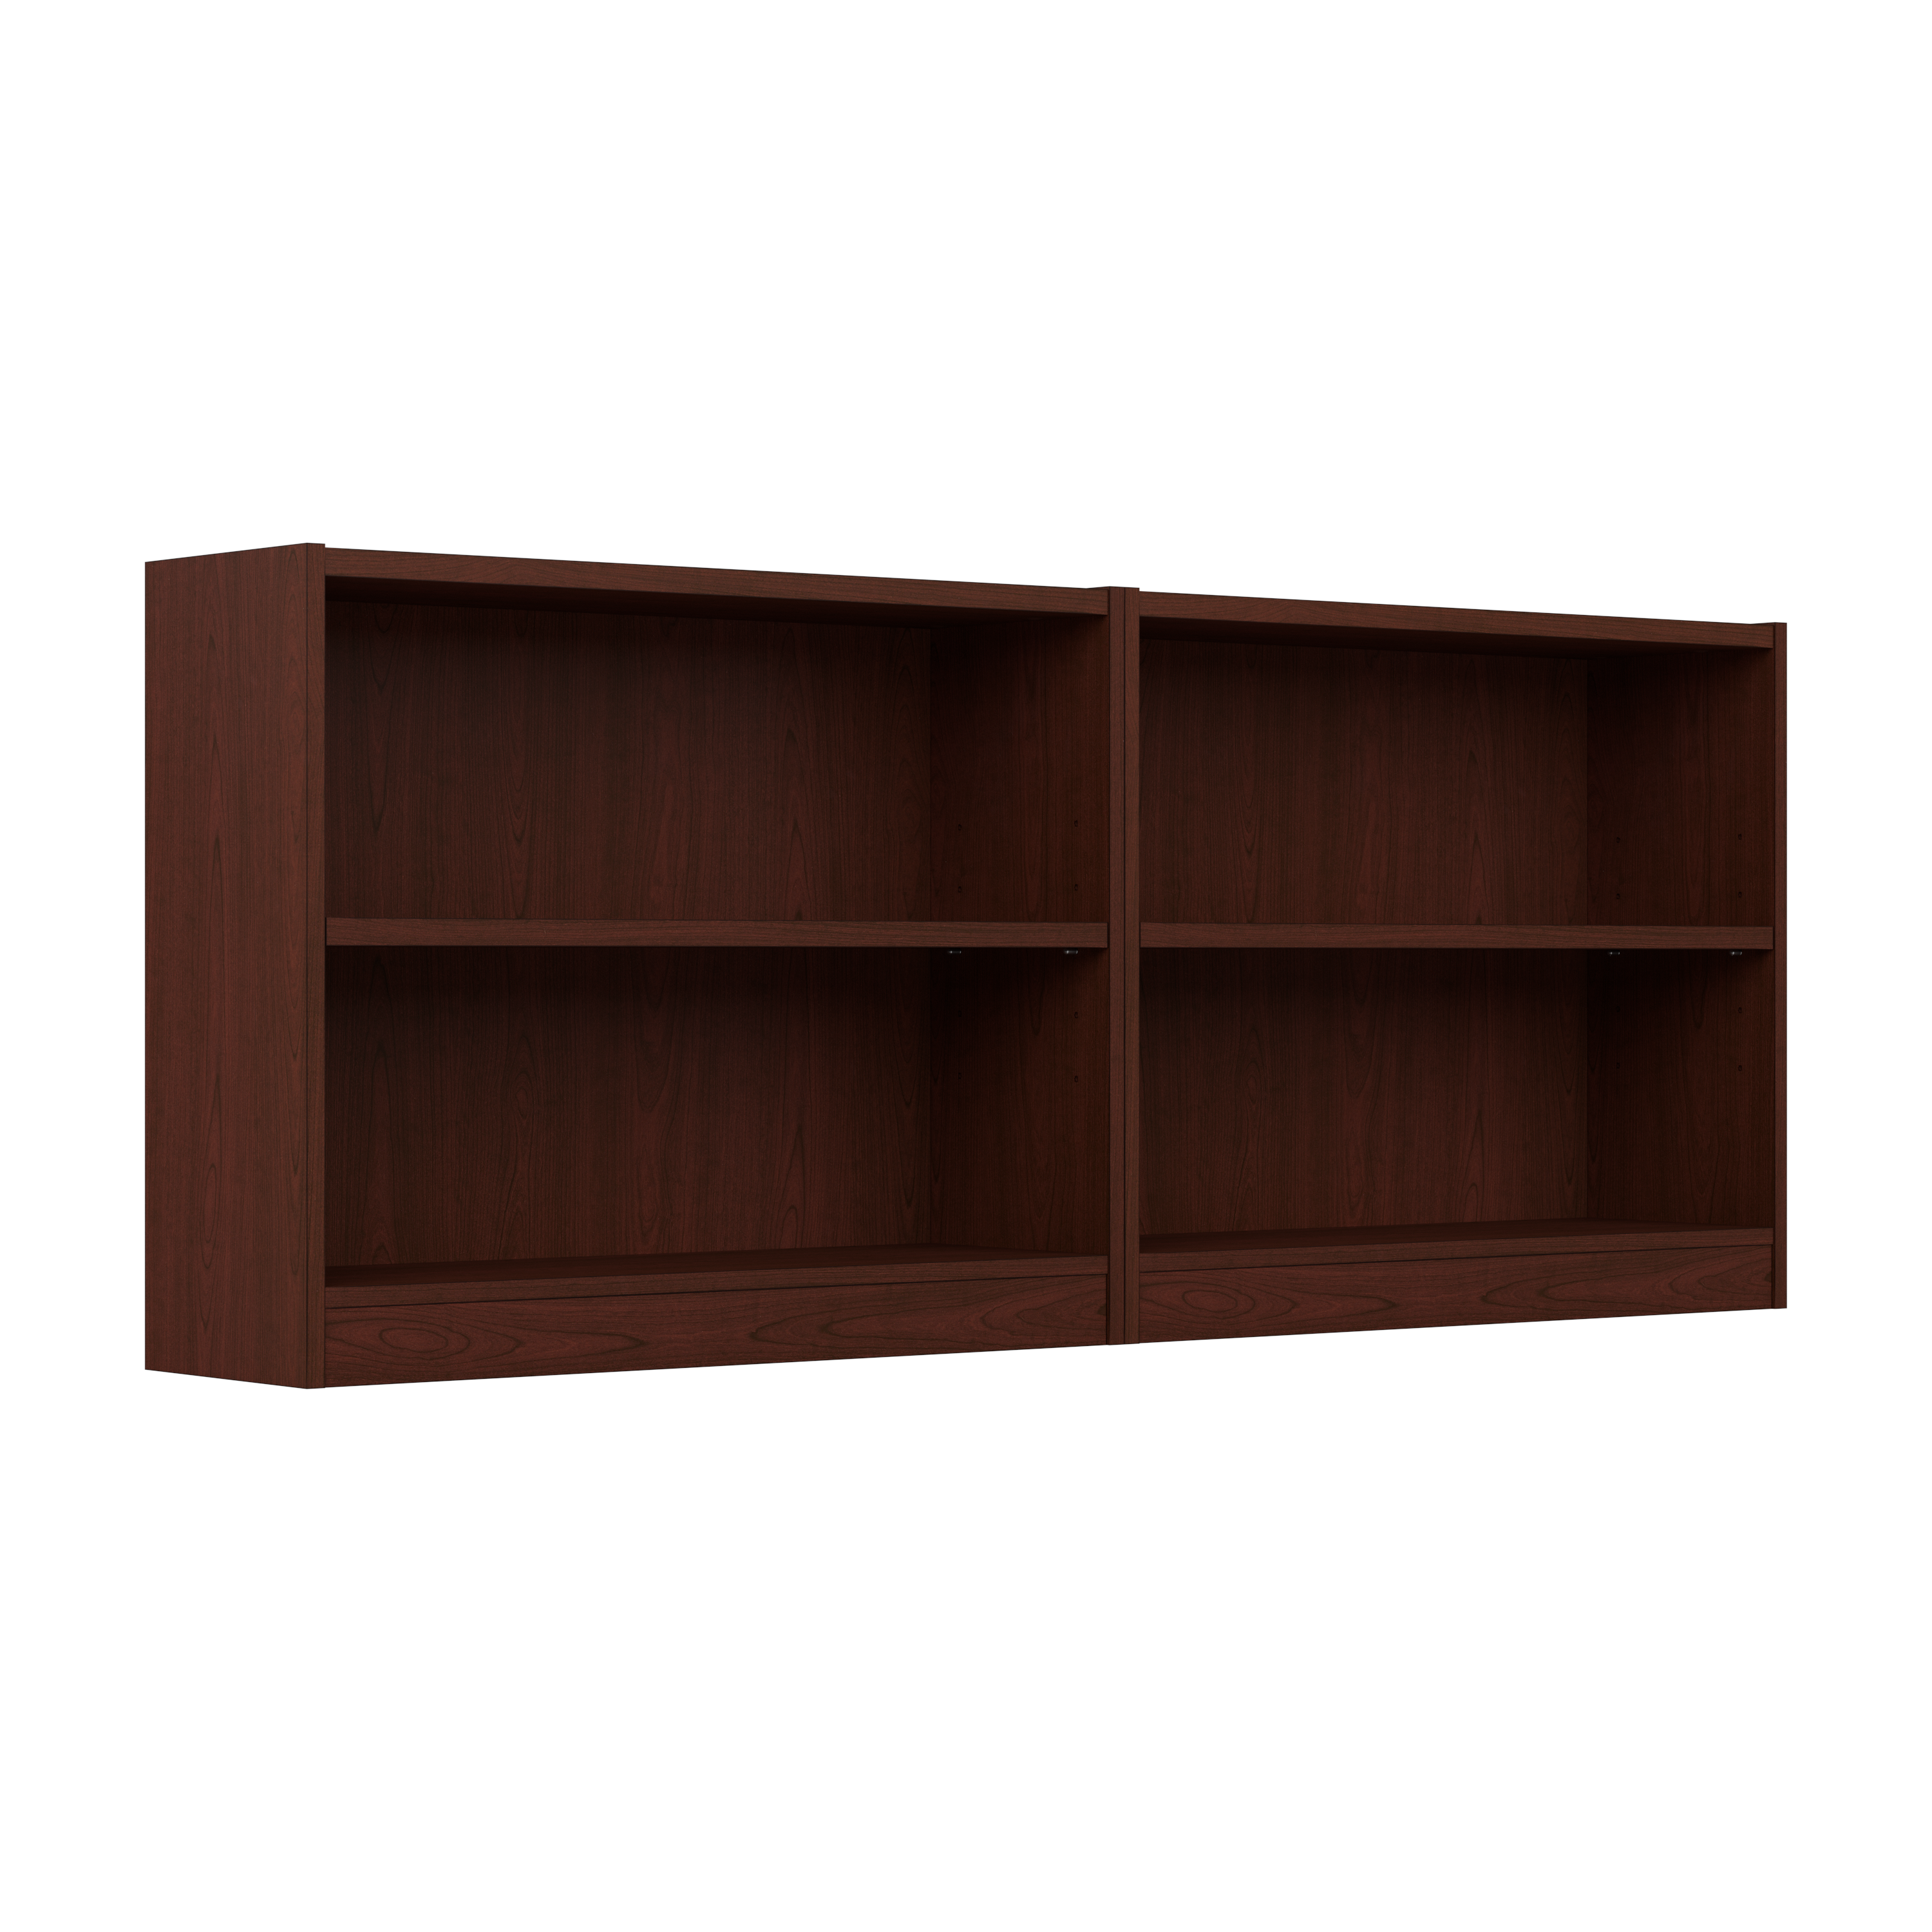 Shop Bush Furniture Universal Small 2 Shelf Bookcase - Set of 2 02 UB001VC #color_vogue cherry